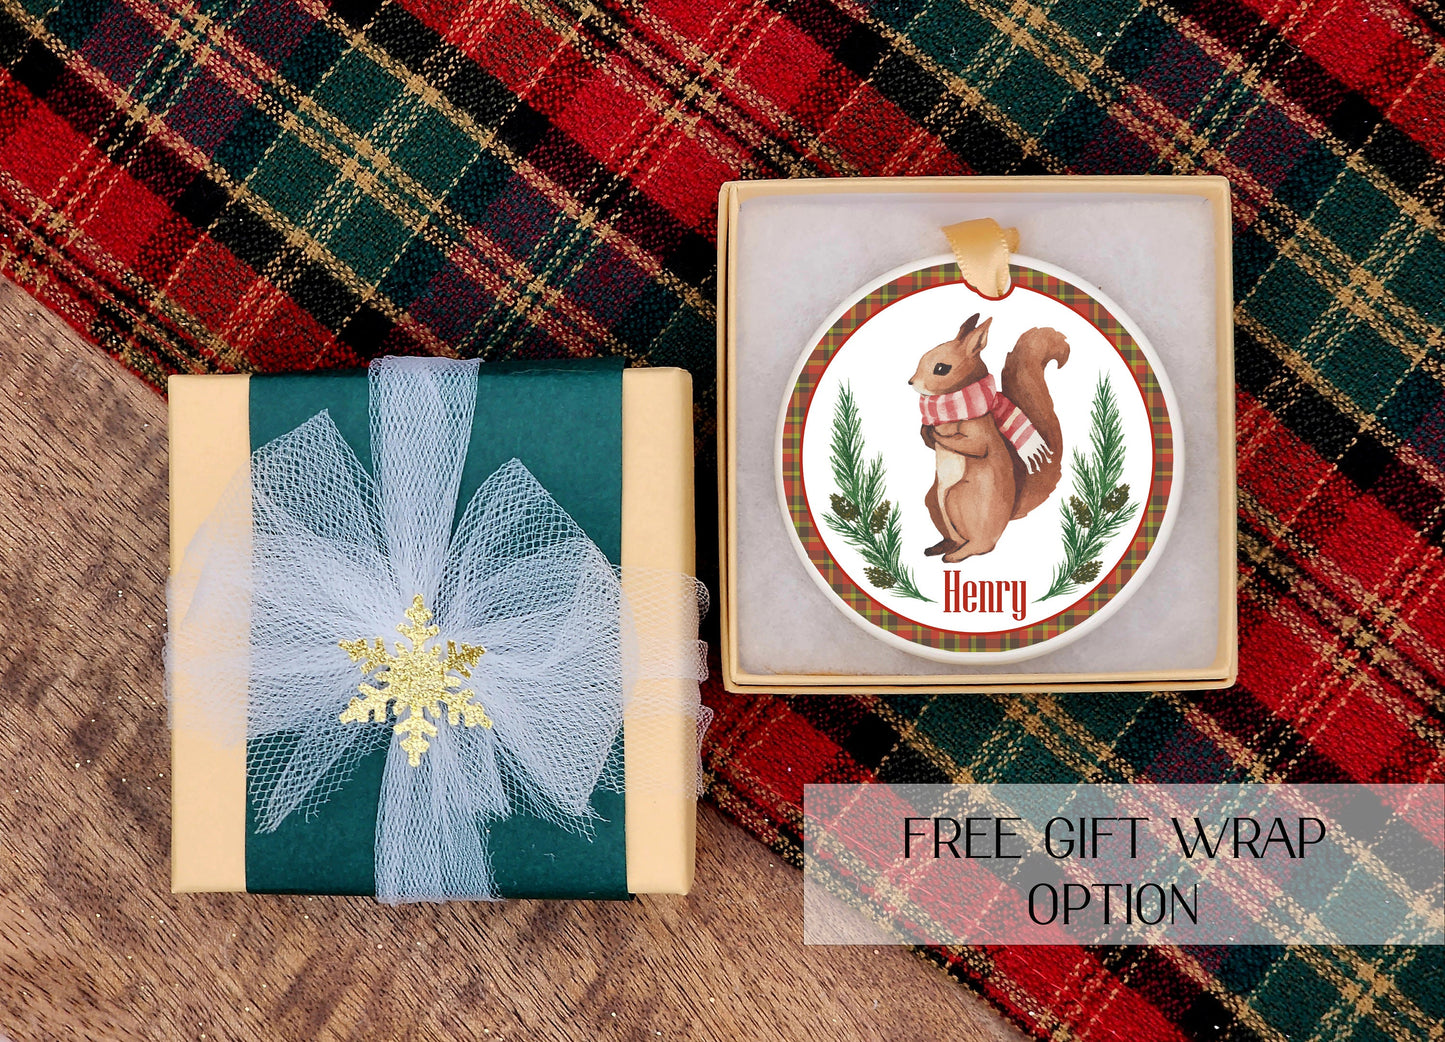 Squirrel ornament - nature ornament - Squirrel ornaments - Squirrel lover gift - Woodland ornament - Christmas squirrel